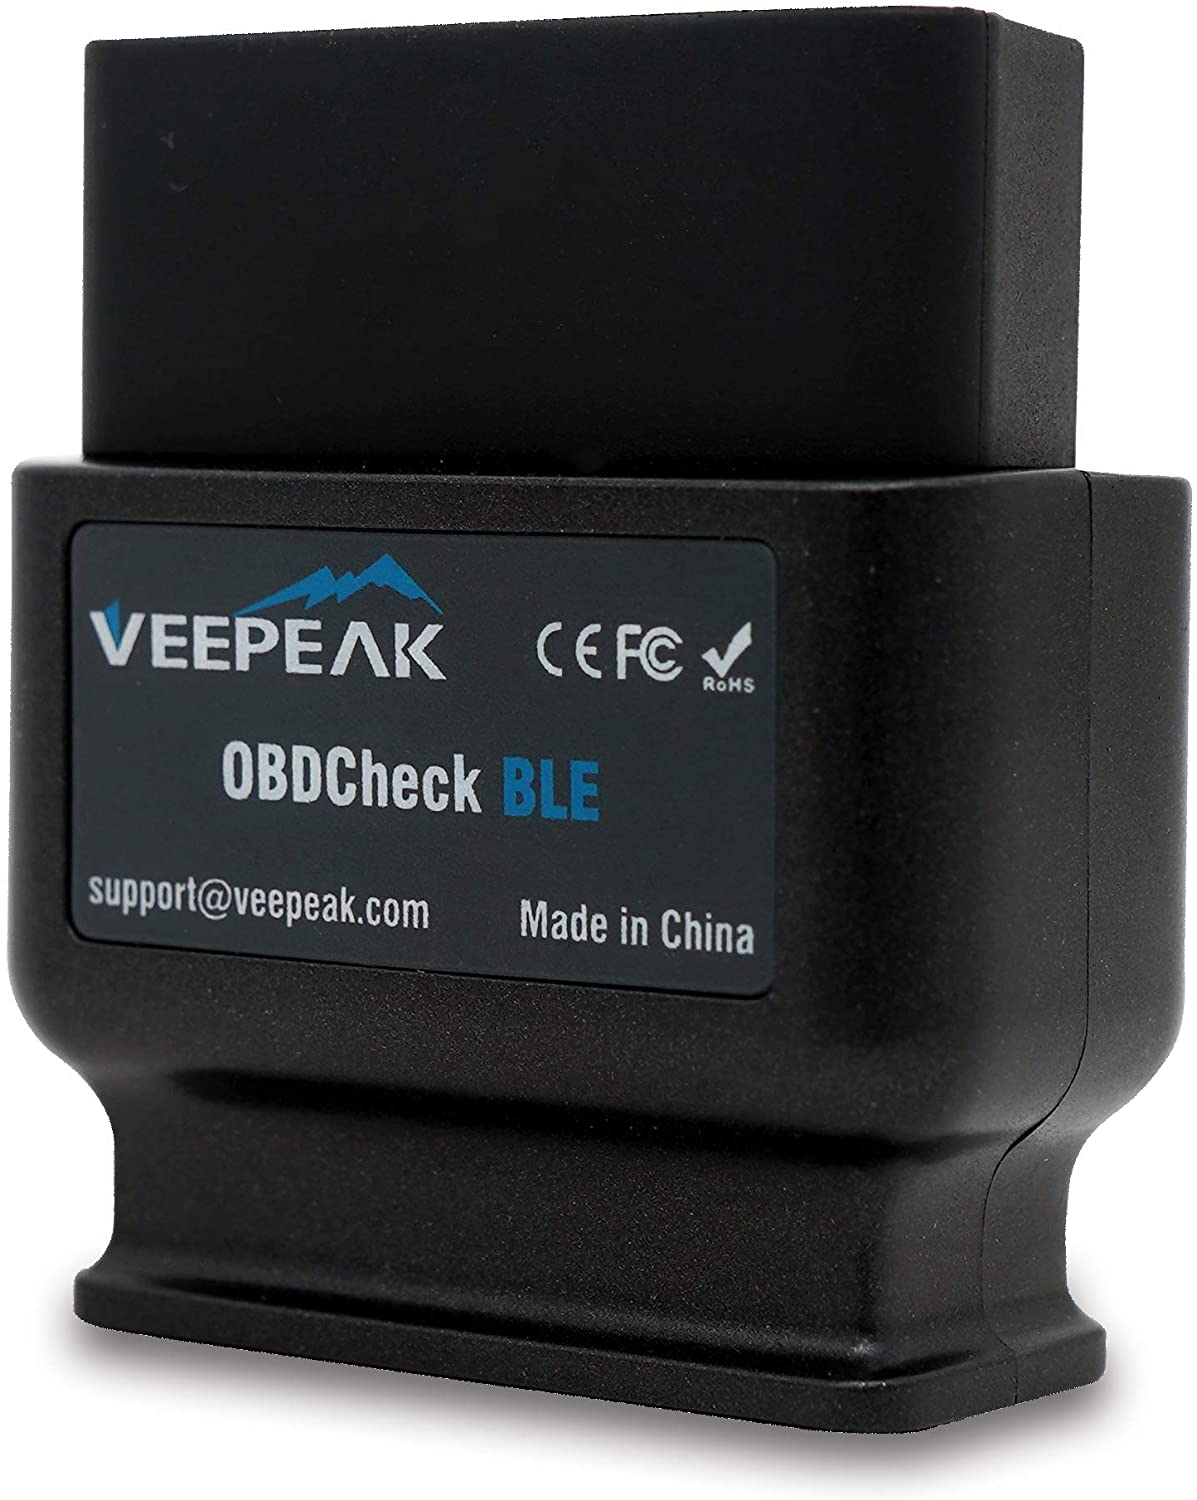 Veepeak OBDCheck BLE OBD2 Bluetooth Scanner - Supports Torque, OBD Fus